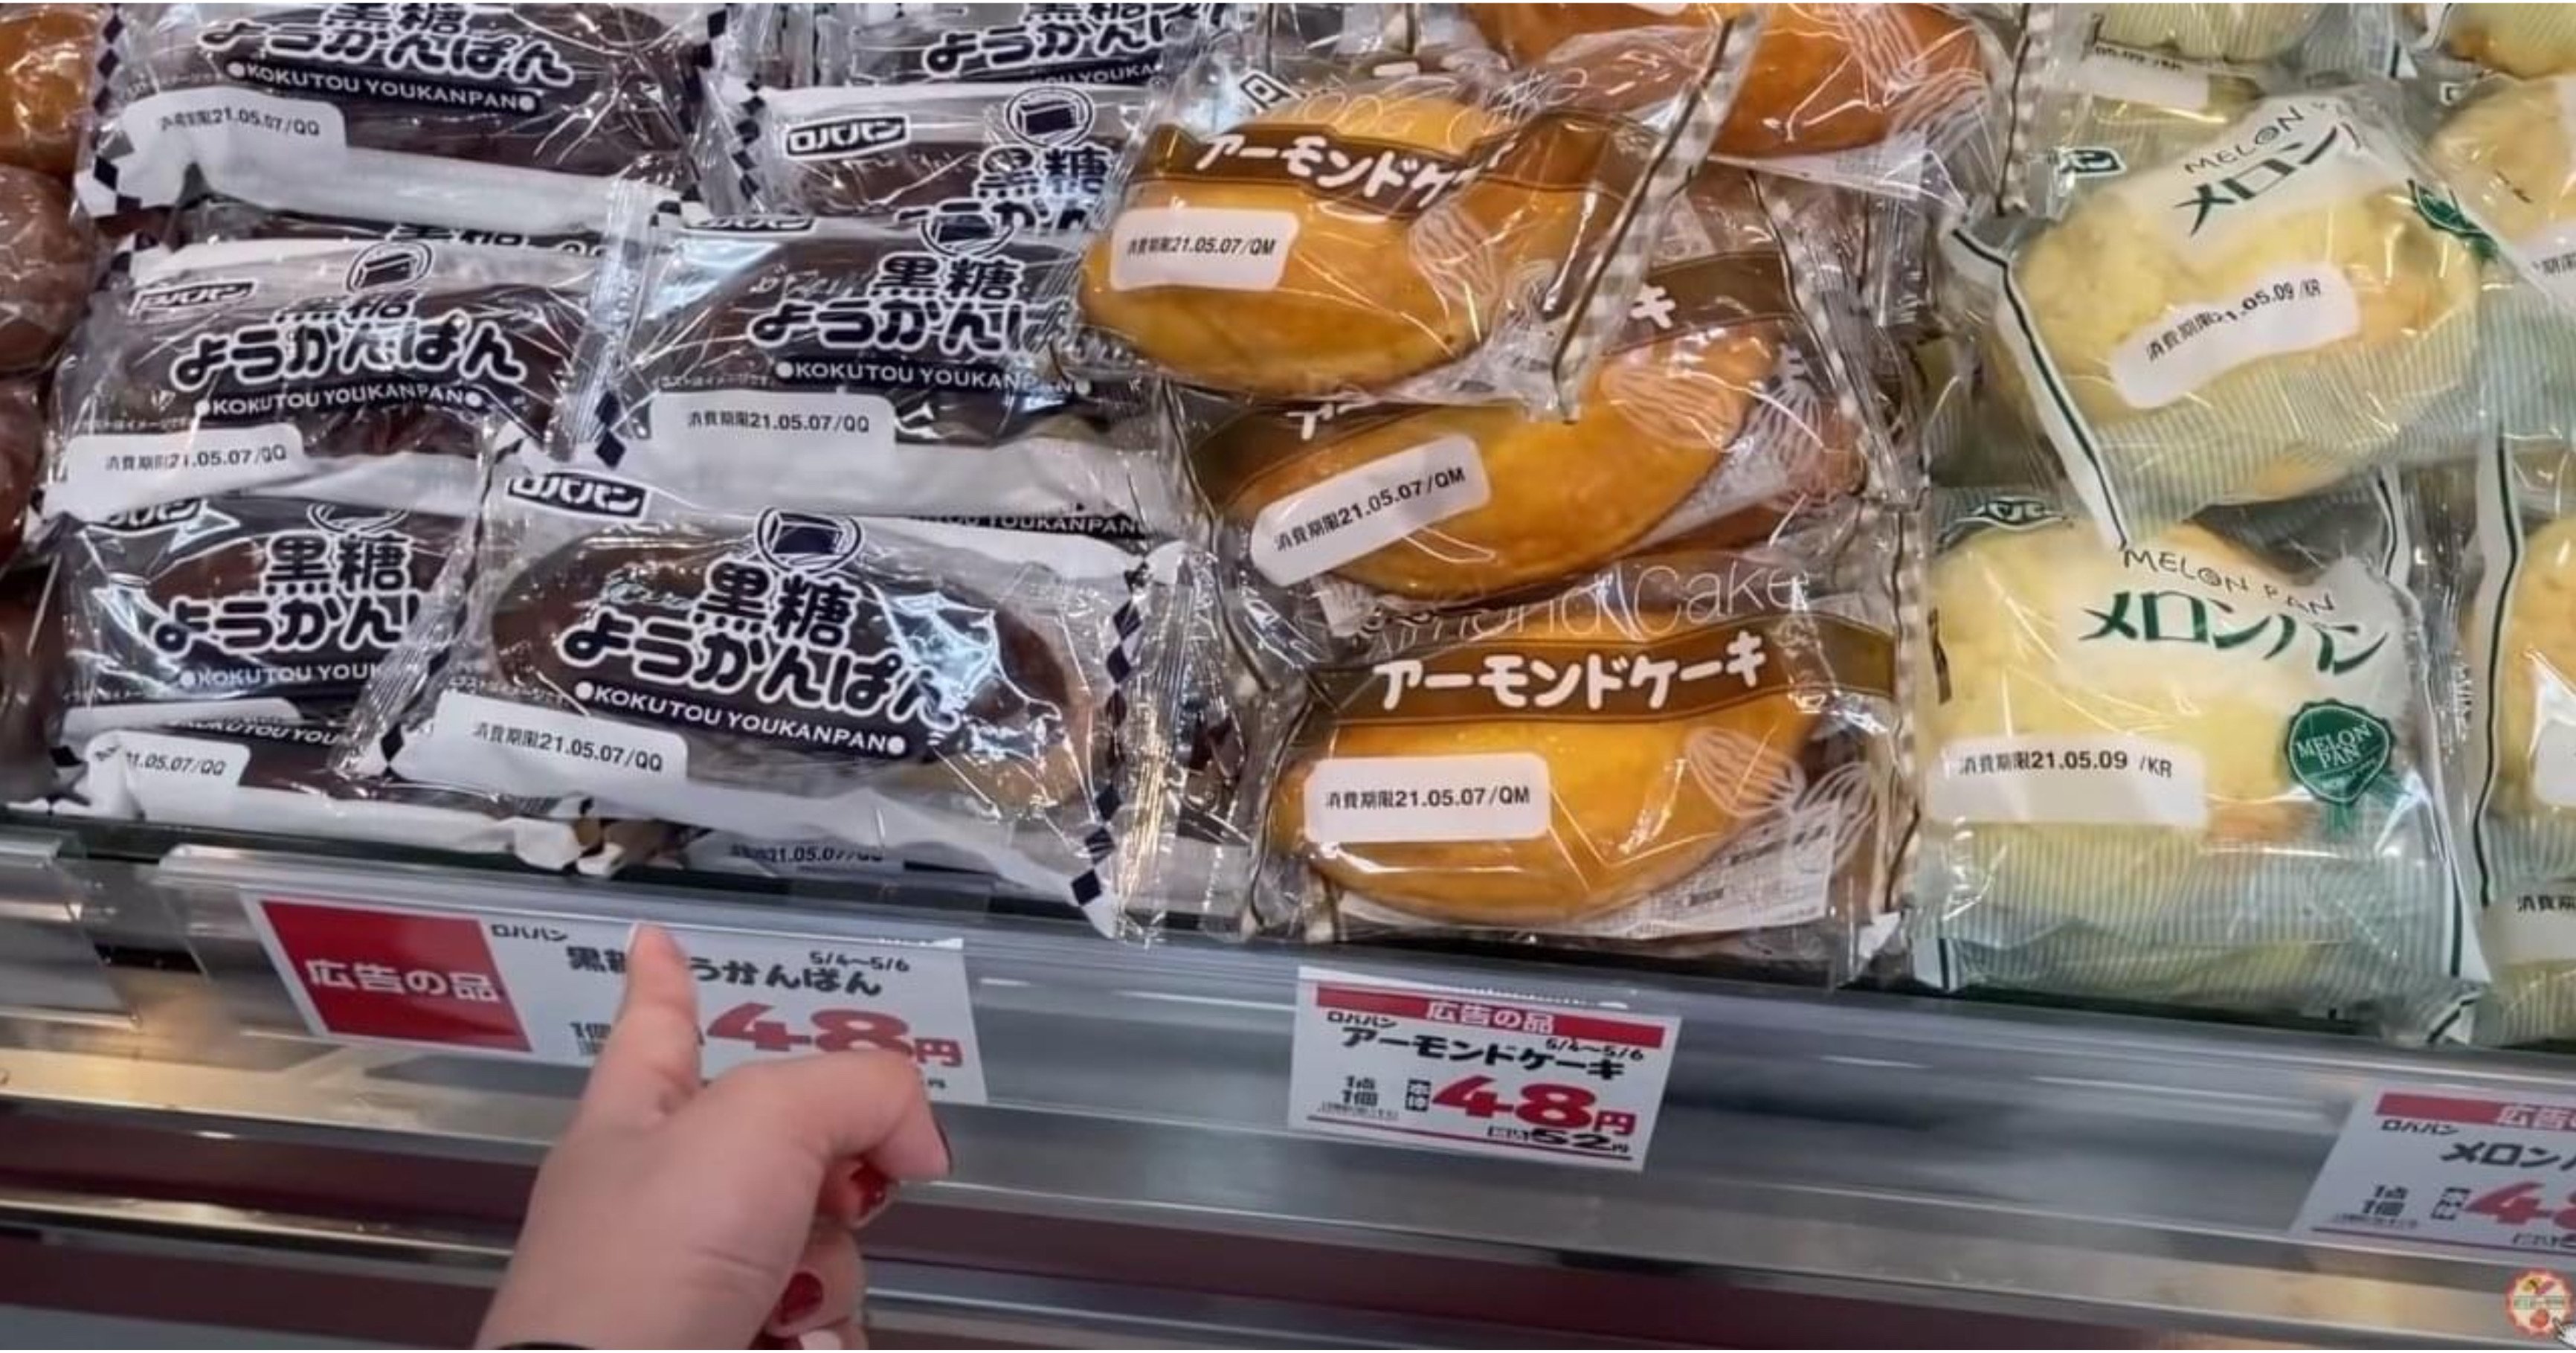 baf2e037 6bfb 4f03 a564 cf4373c51693.jpeg?resize=412,232 - 정신나간 일본 빵 가격